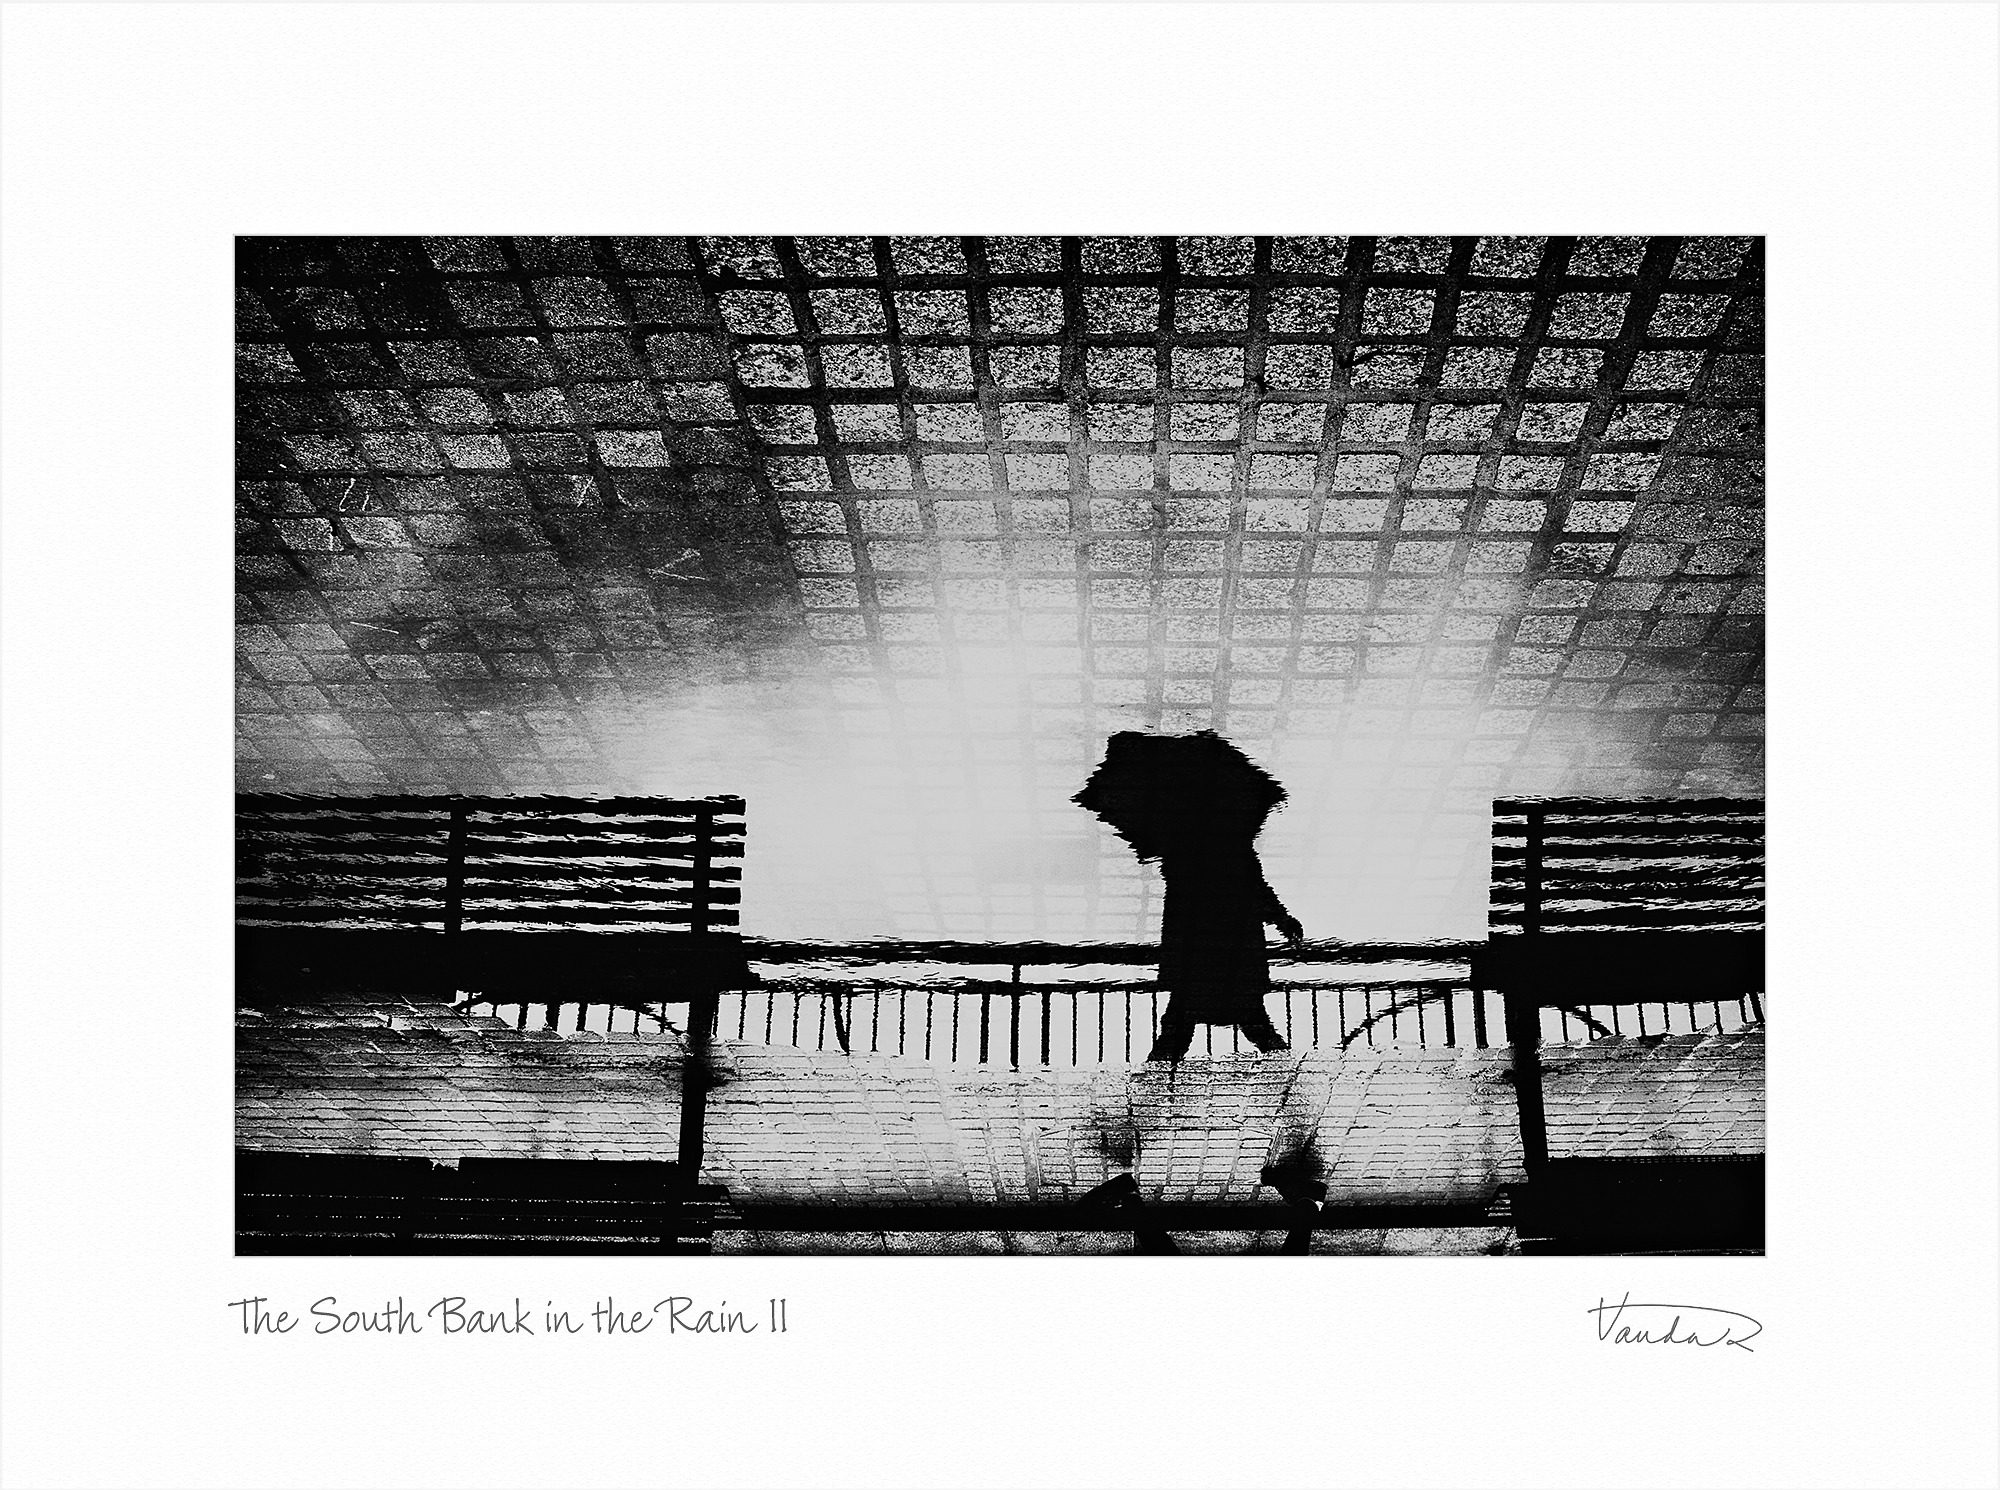 The South Bank in the Rain II